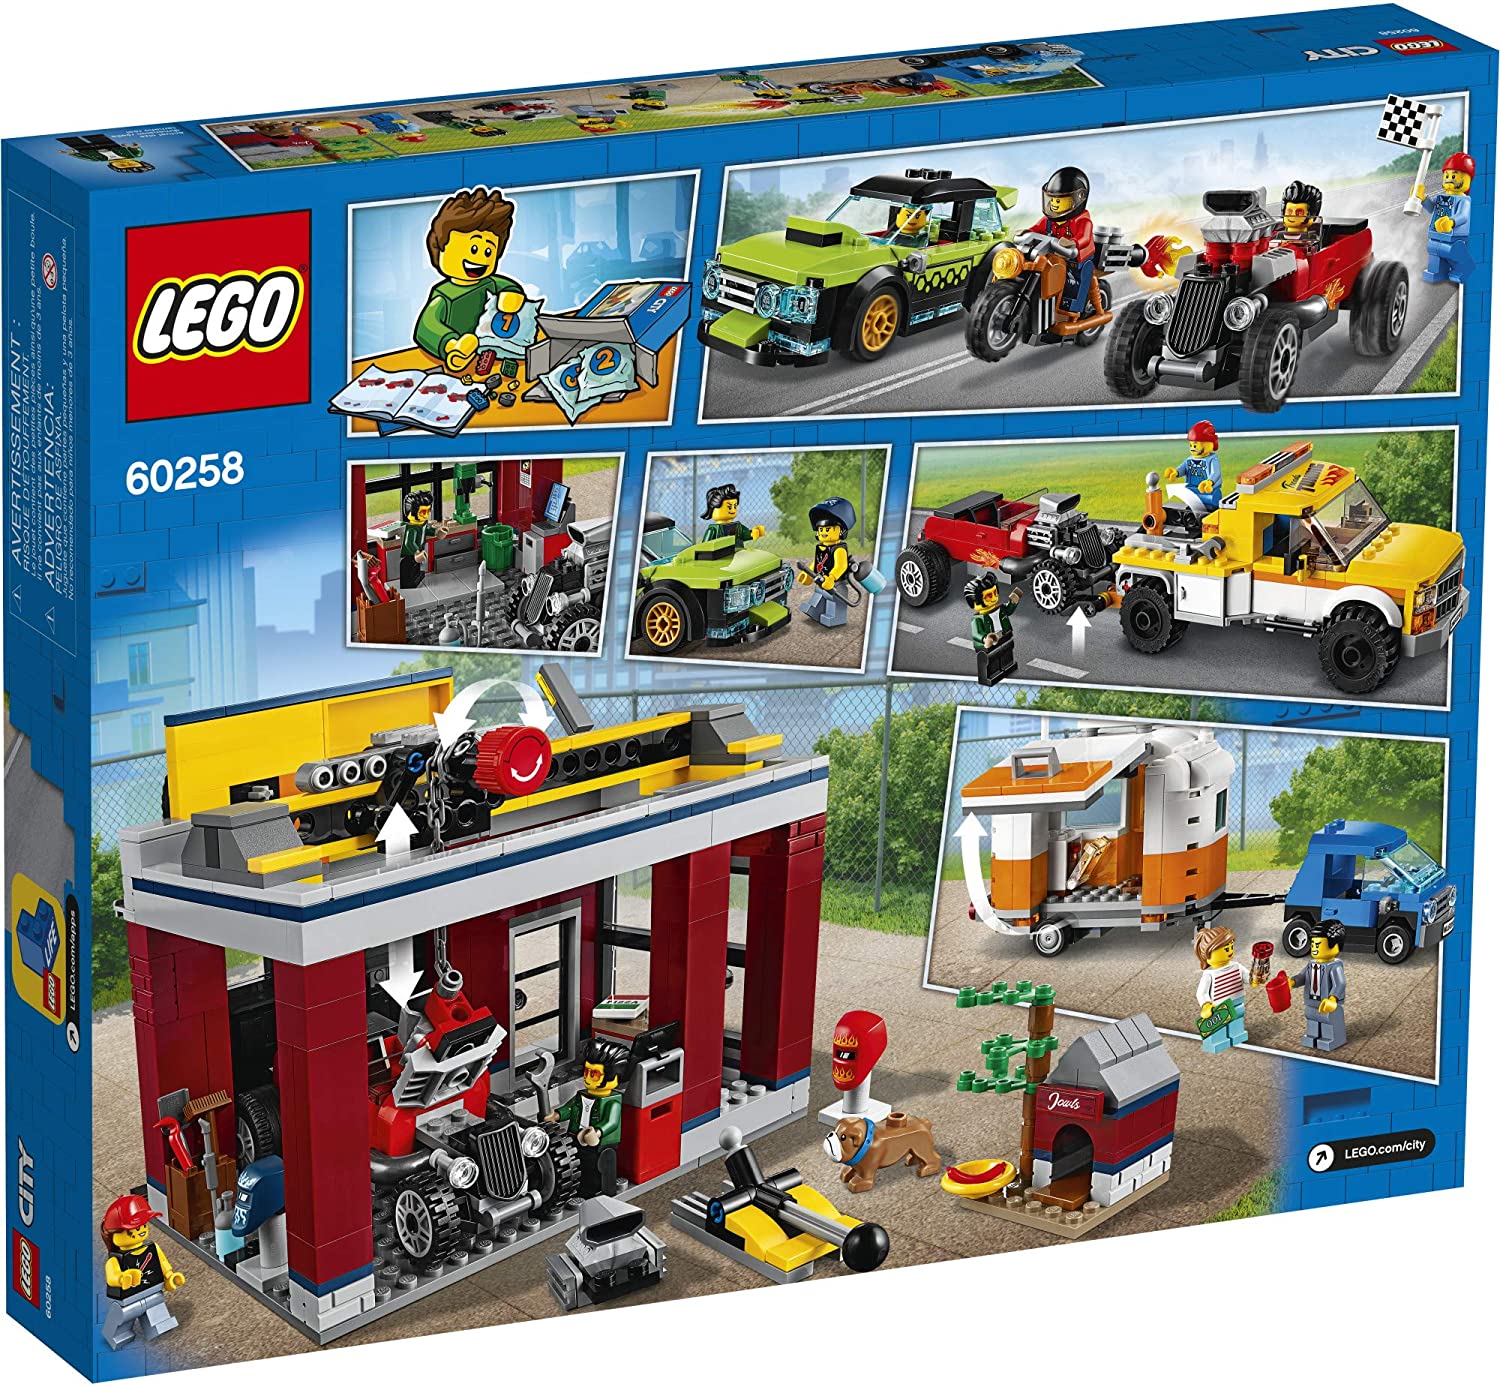 Lego City Tuning Workshop Toy Car Garage Cool Building Set, 897 Pieces - ANB Baby -block set